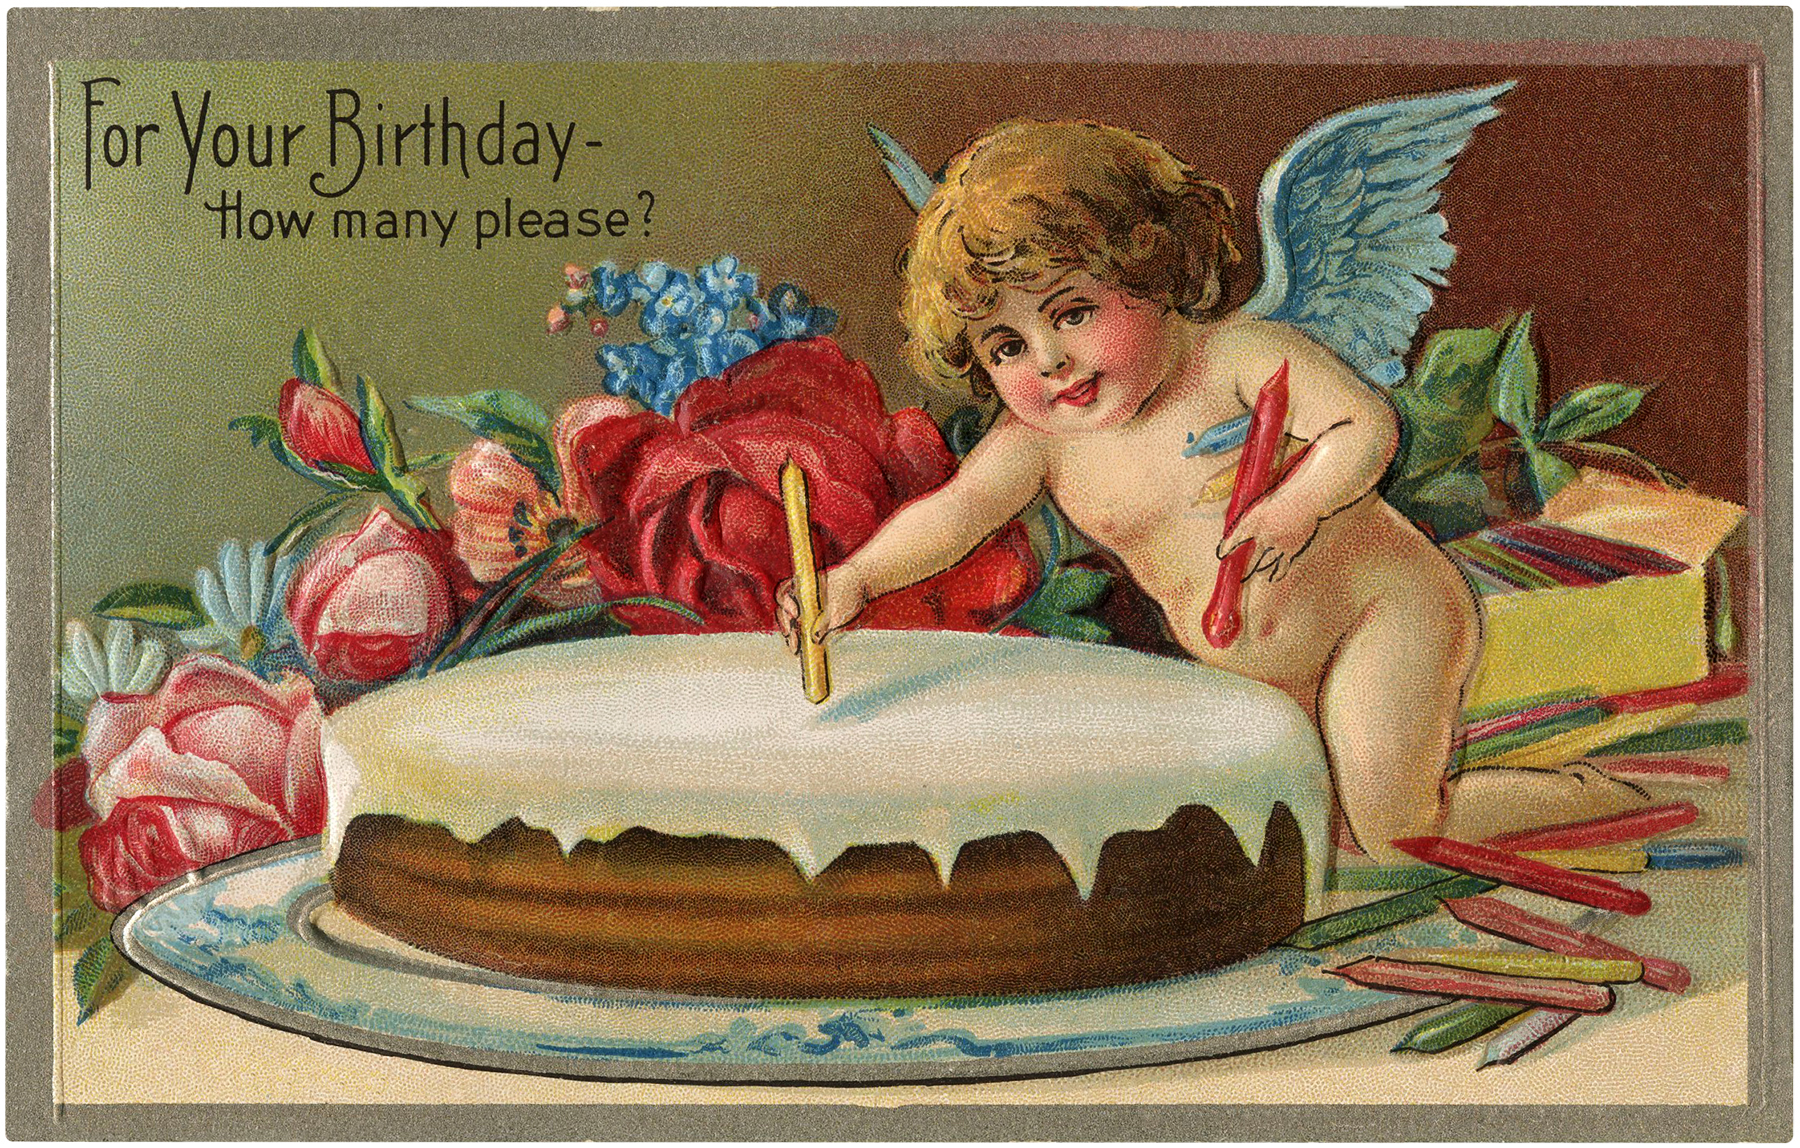 https://thegraphicsfairy.com/wp-content/uploads/2019/12/Vintage-Birthday-Cherub-GraphicsFairy.jpg